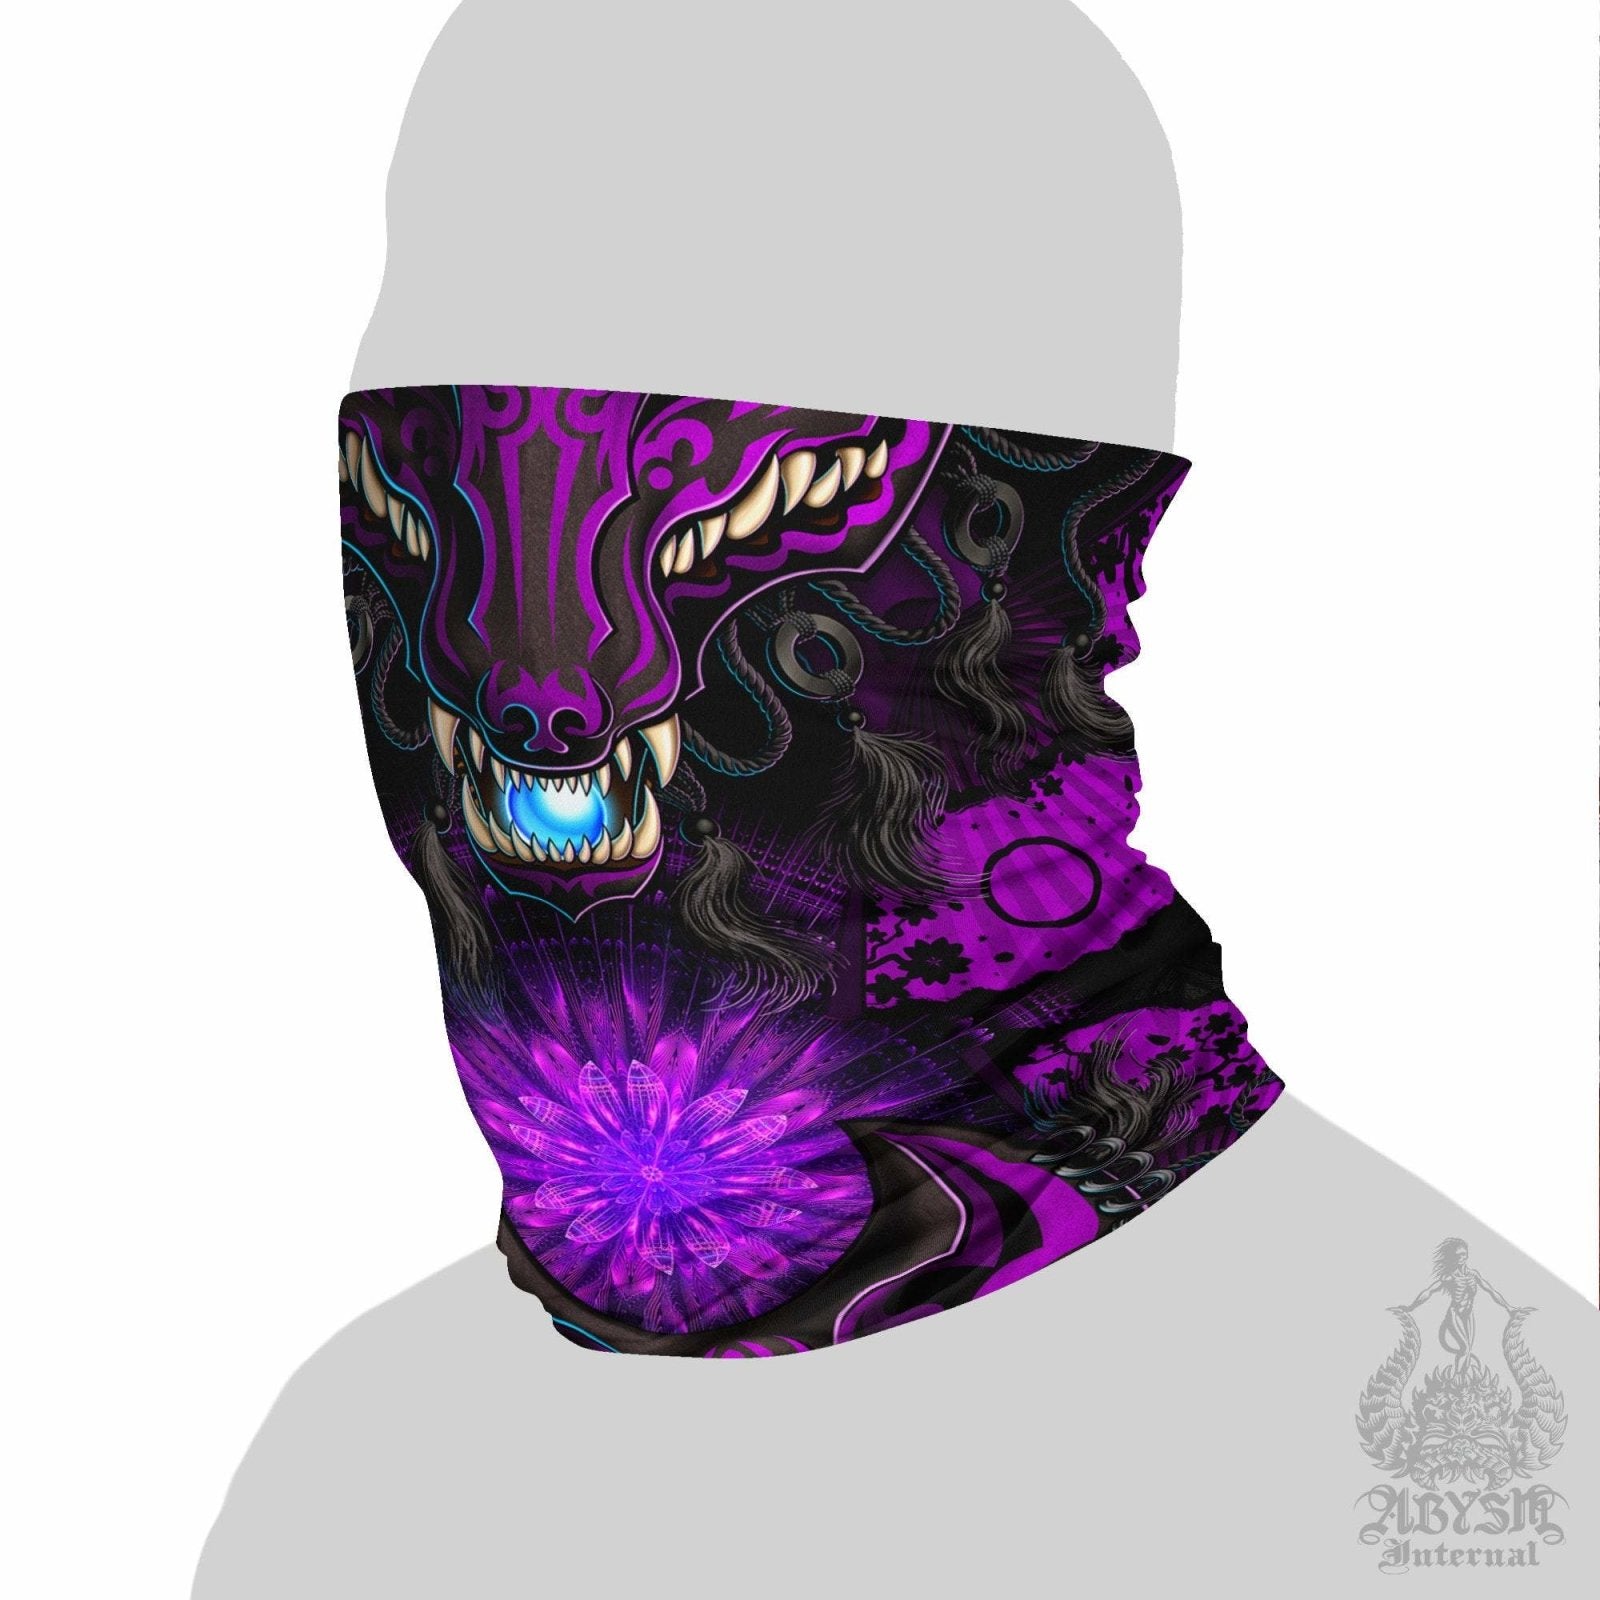 Anime Neck Gaiter, Face Mask, Head Covering, Kitsune, Japanese, Fox, Okami, Gamer Gift - Pastel Goth, Black & Purple - Abysm Internal